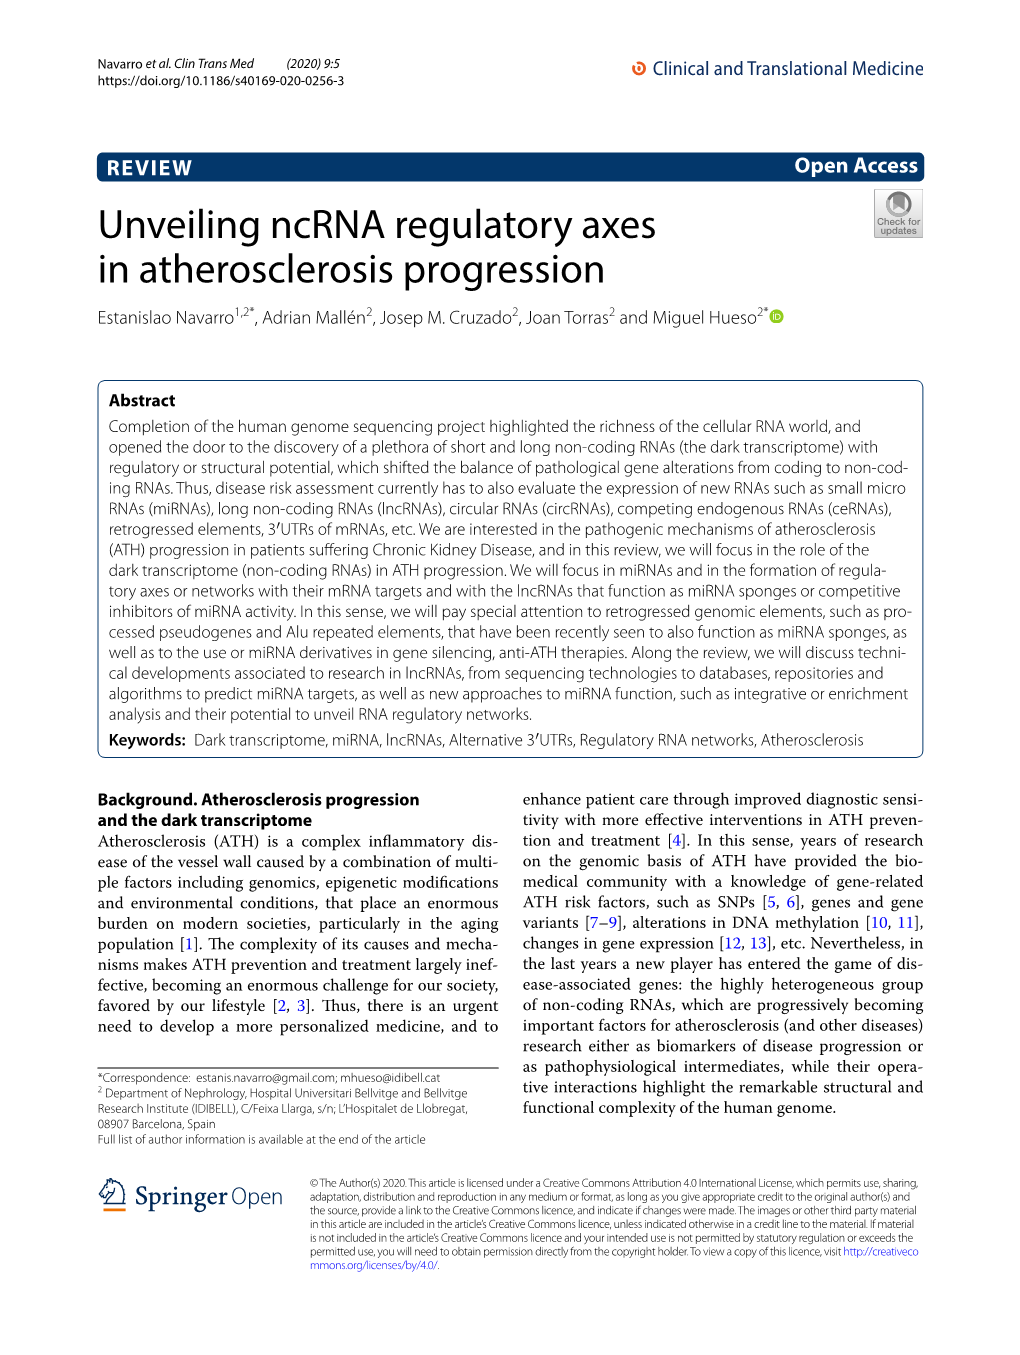 Unveiling Ncrna Regulatory Axes in Atherosclerosis Progression Estanislao Navarro1,2*, Adrian Mallén2, Josep M